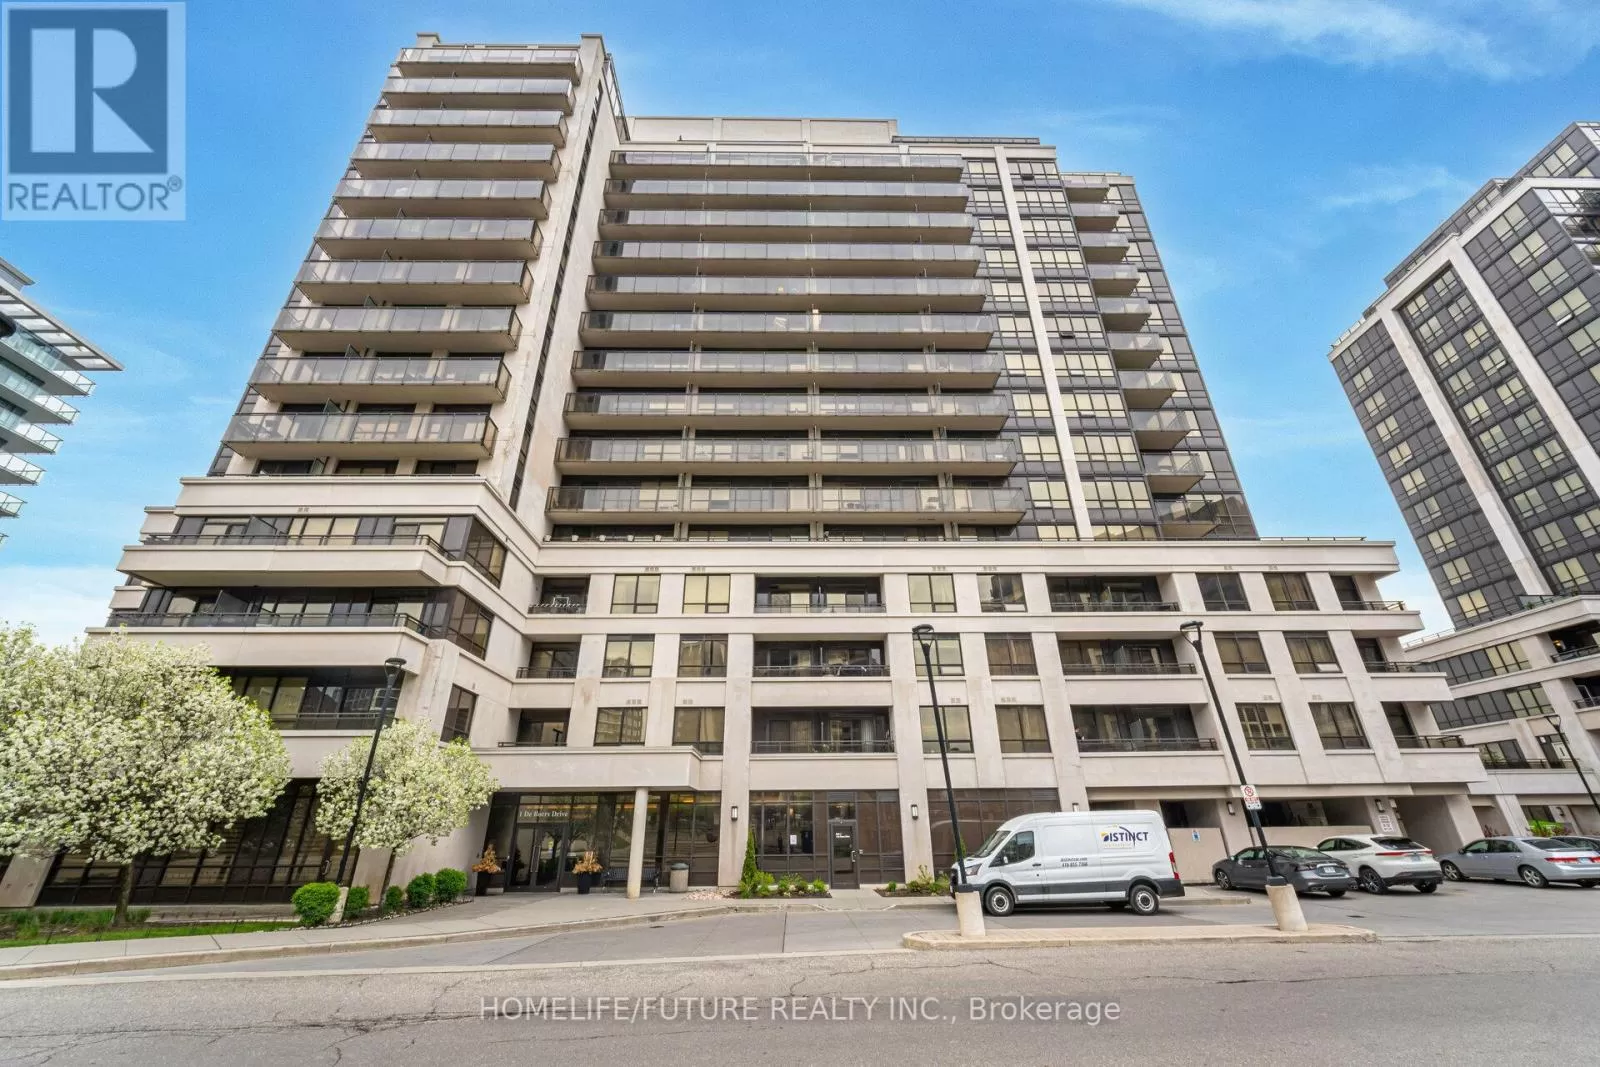 Apartment for rent: 204 - 1 De Boers Drive, Toronto, Ontario M3J 0G6